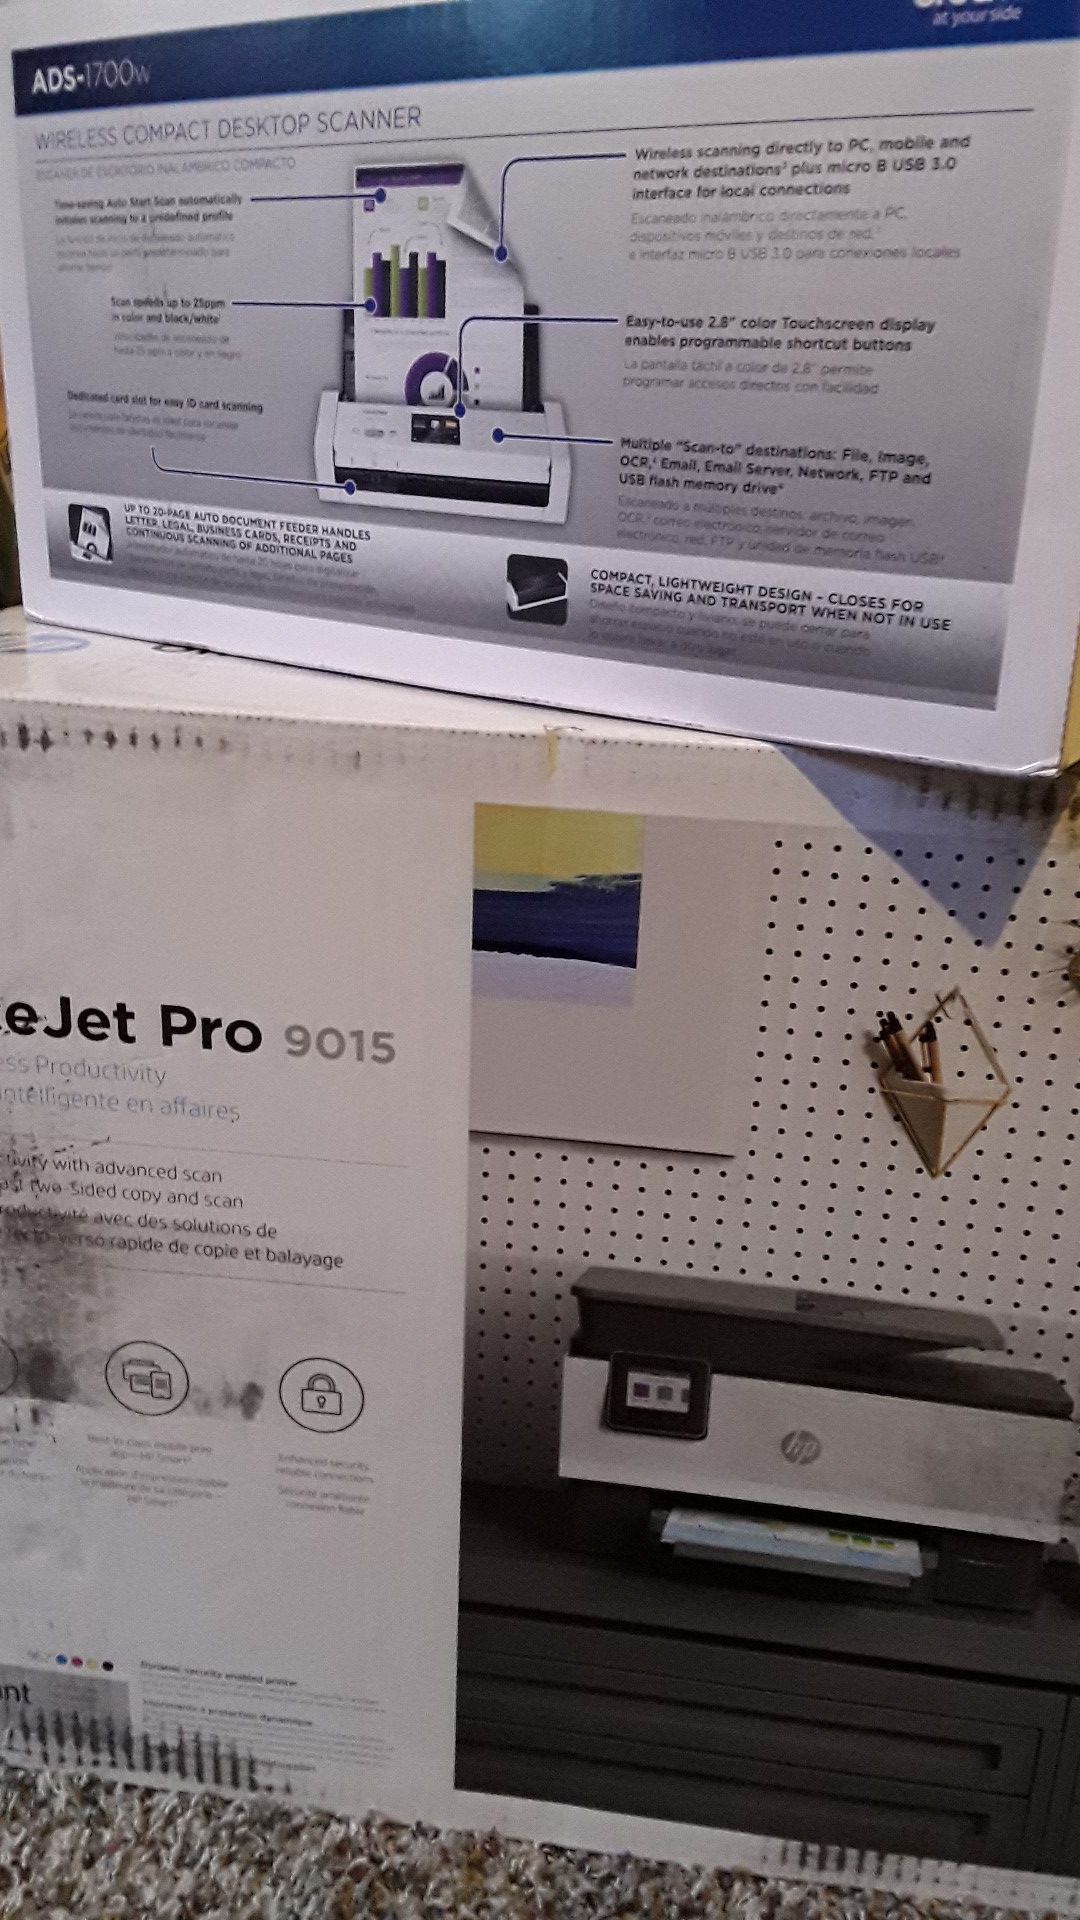 Office jet pro 9015 printer